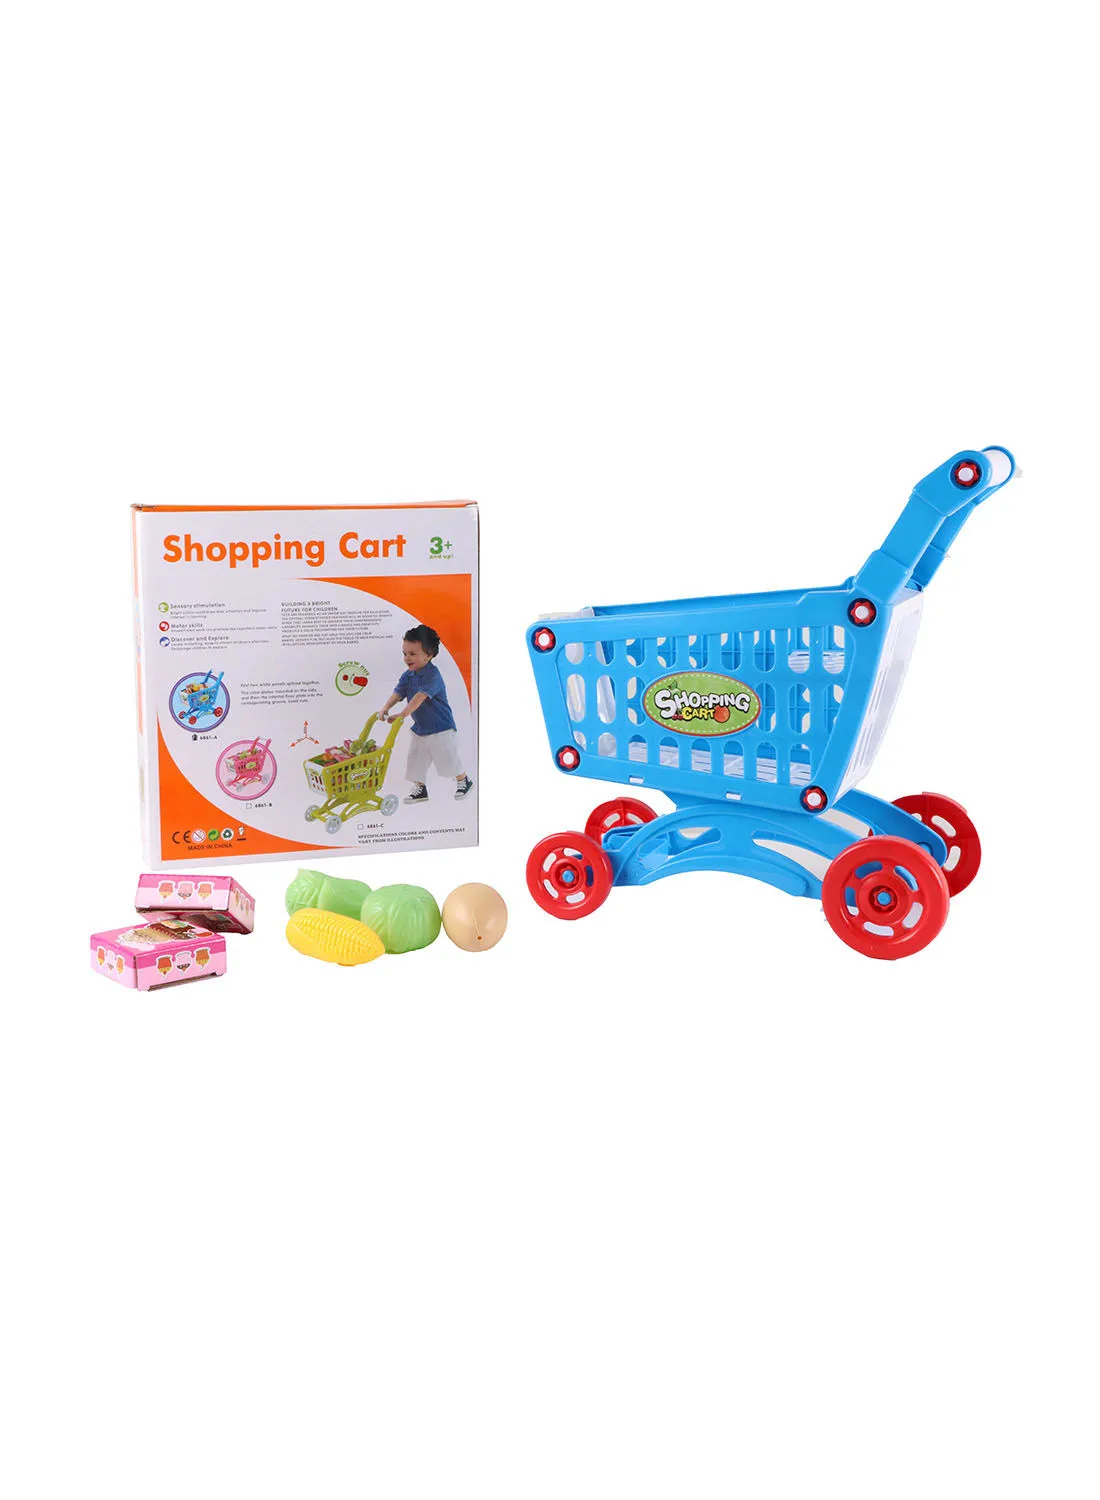 Zunchen Shopping Cart Toy 18m+